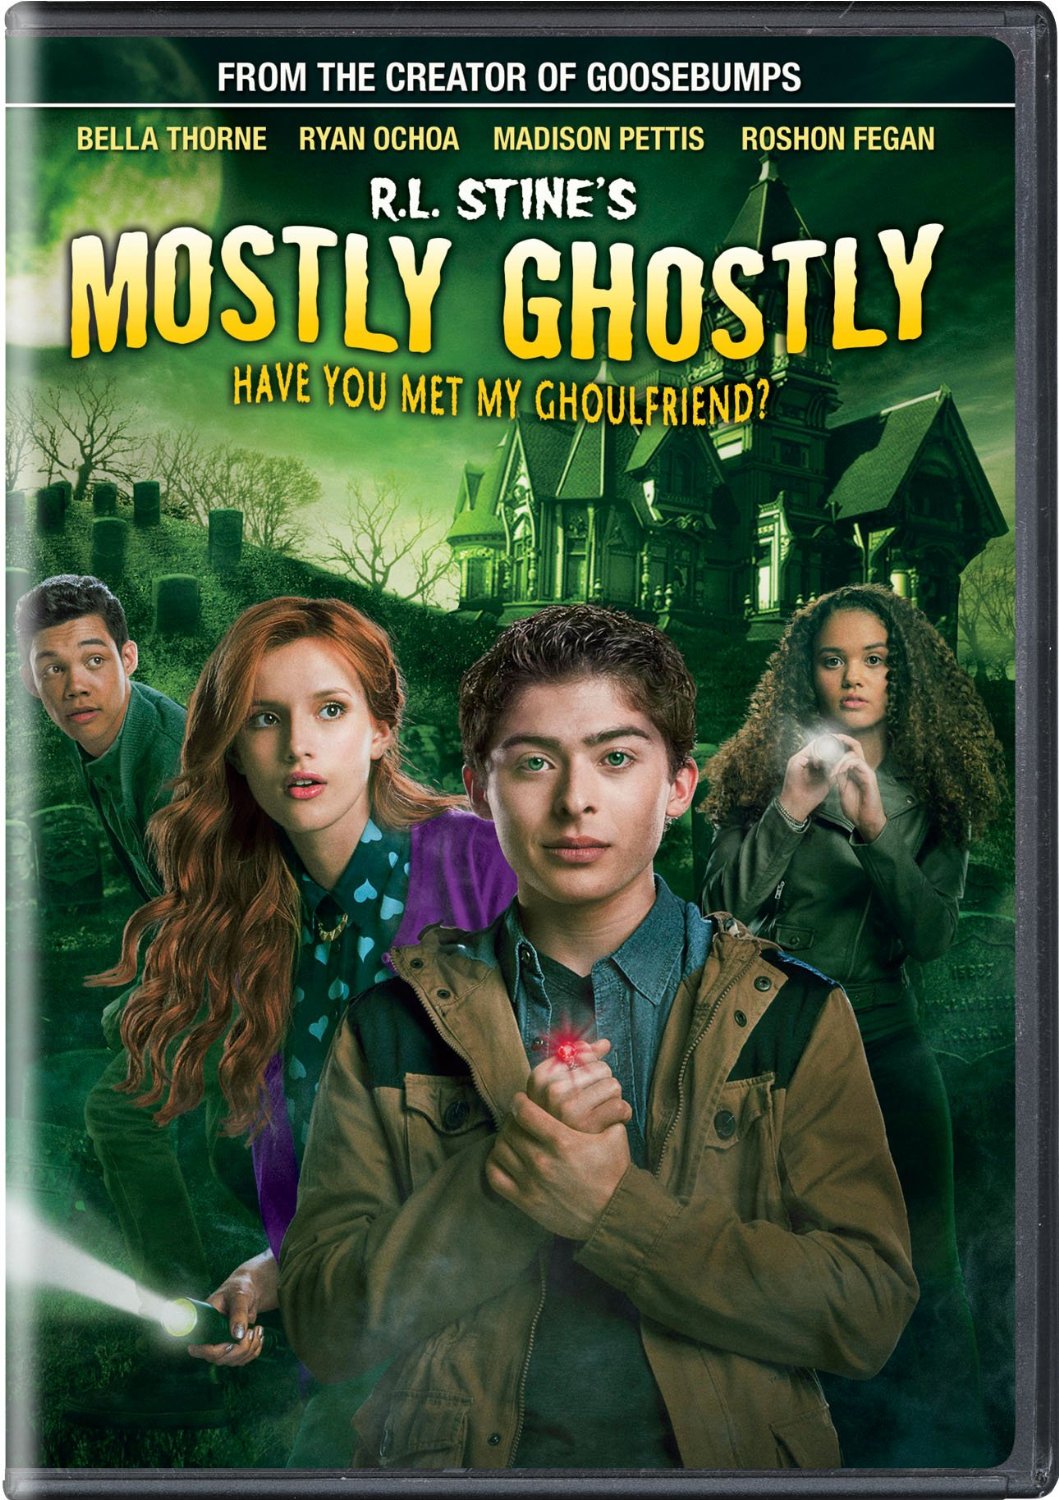 Bella Thorne in Mostly Ghostly: Have You Met My Ghoulfriend?